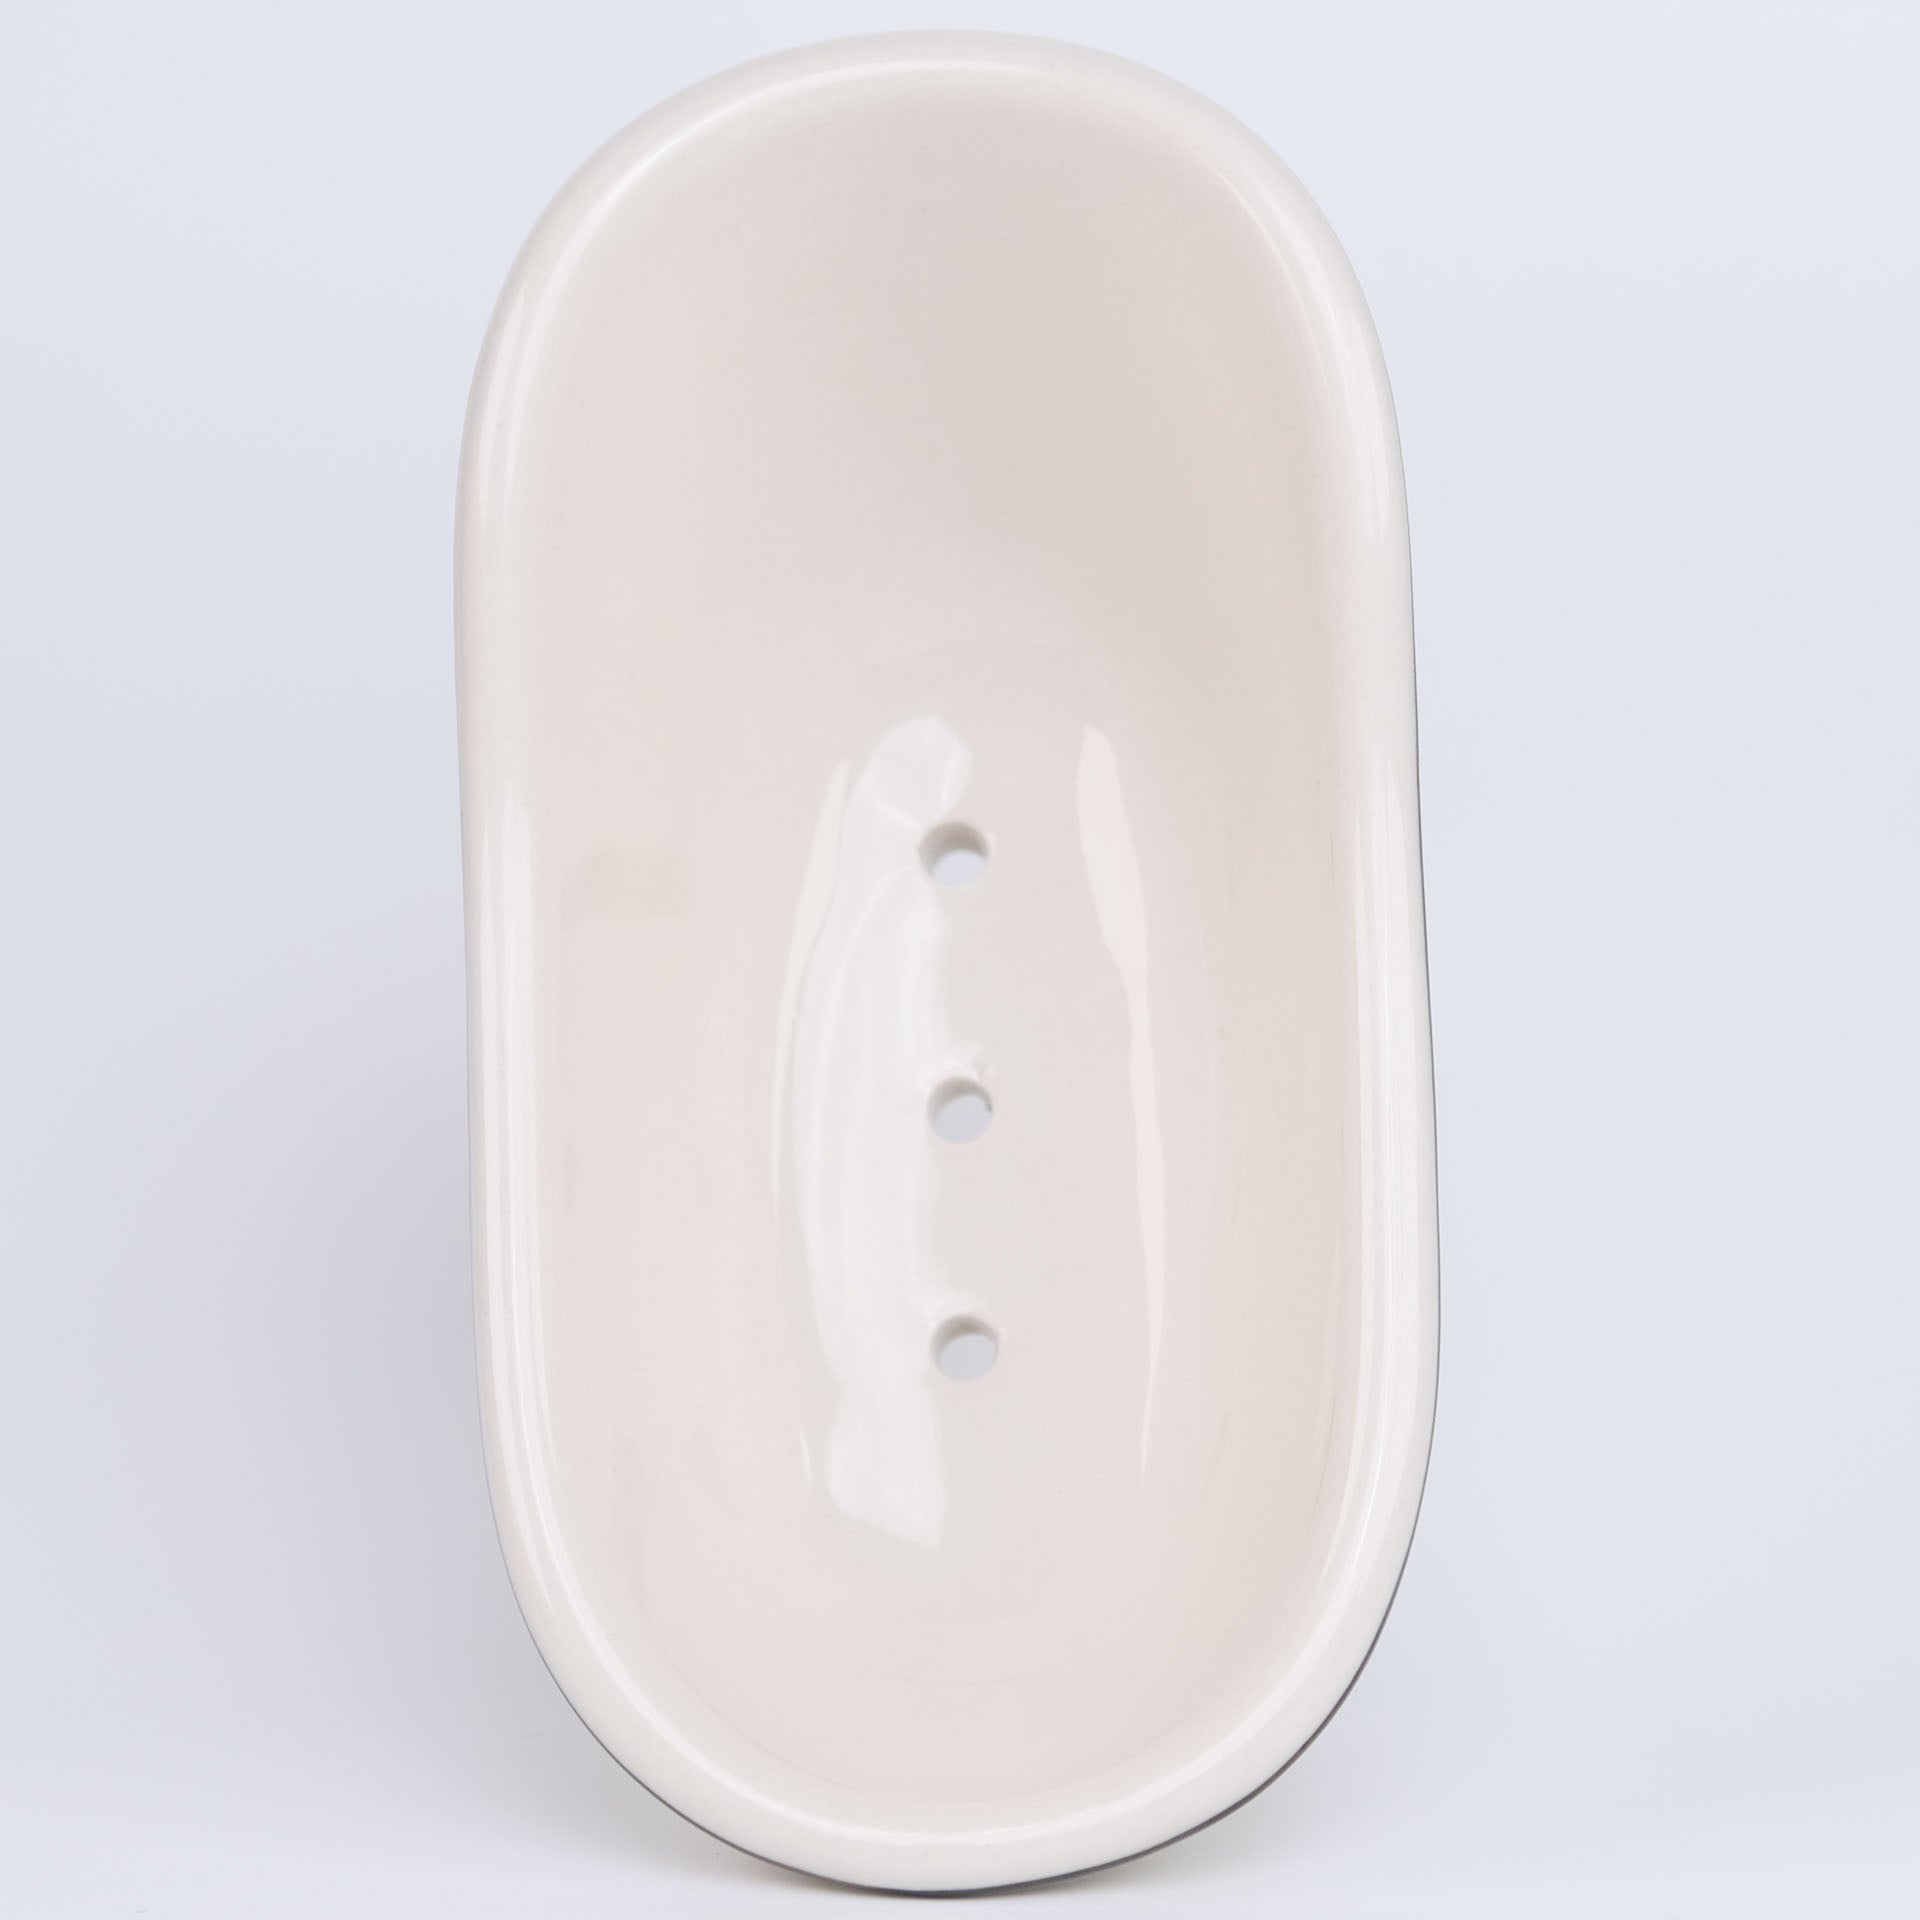 White Porcelain, "Le Bain" Bathtub Soap Dish